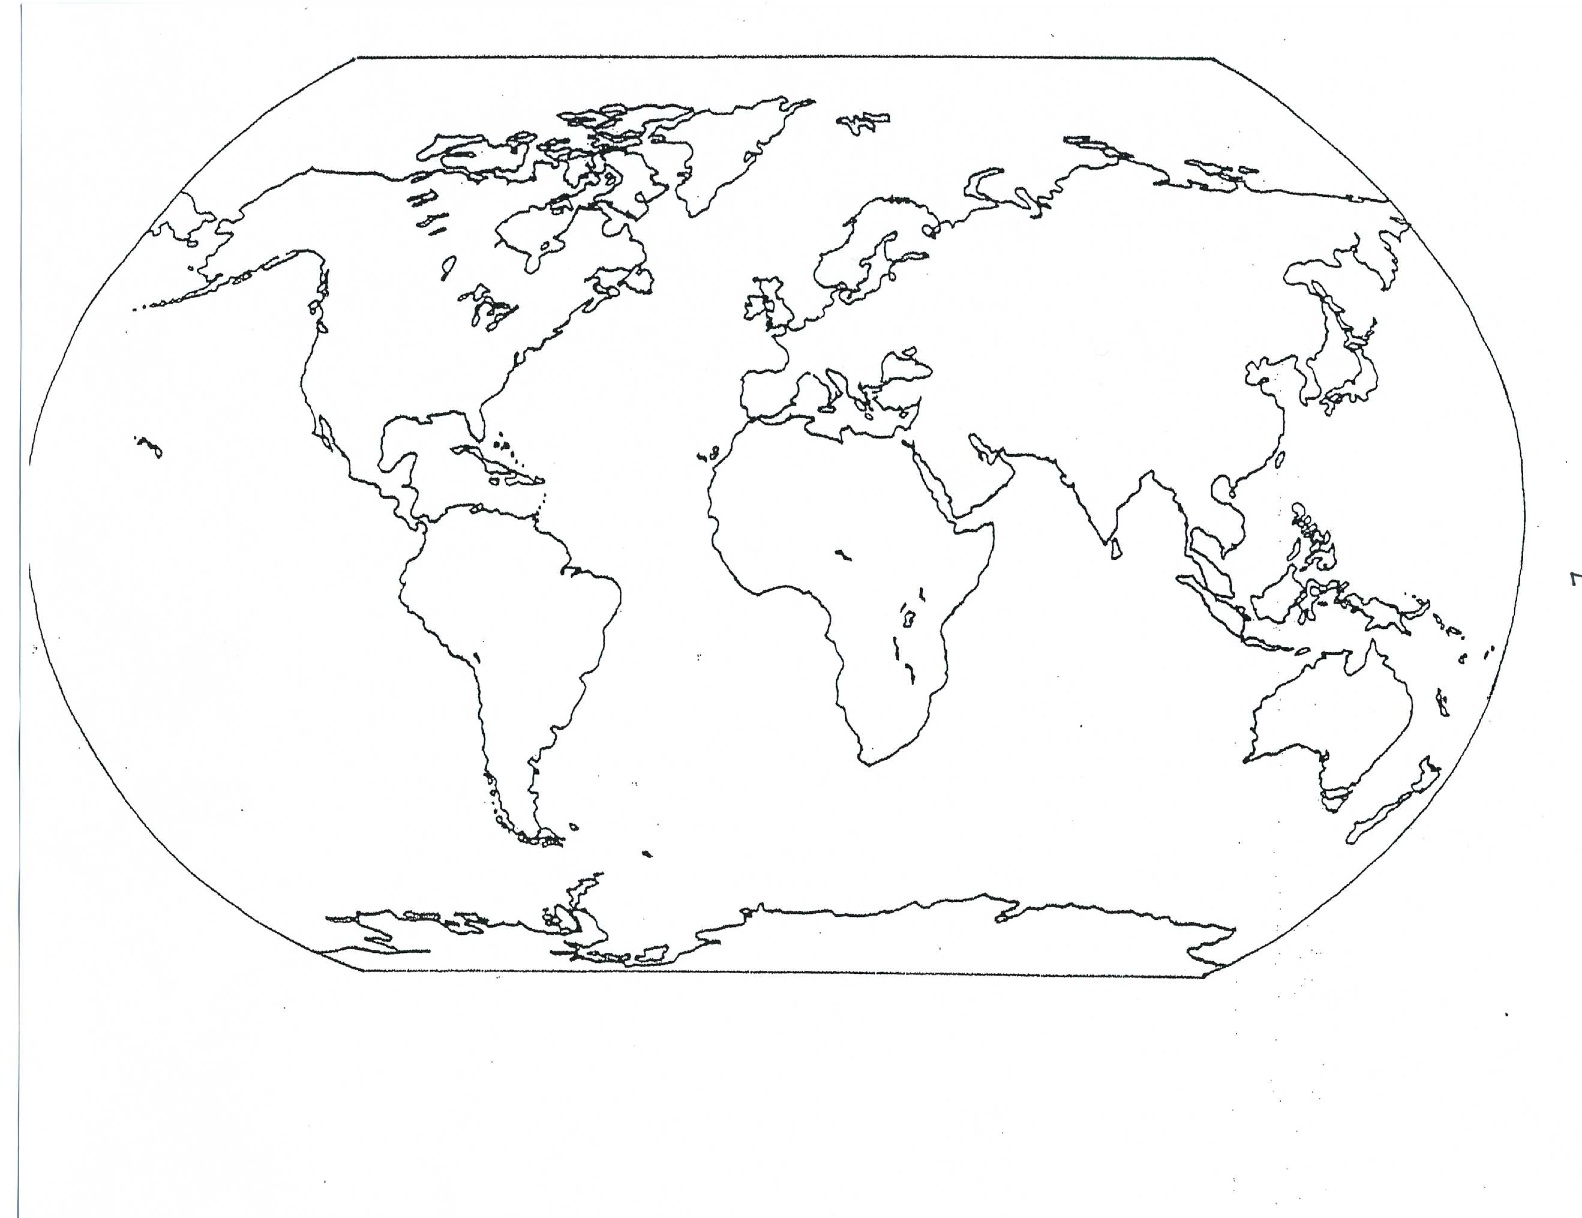 Empty World Map